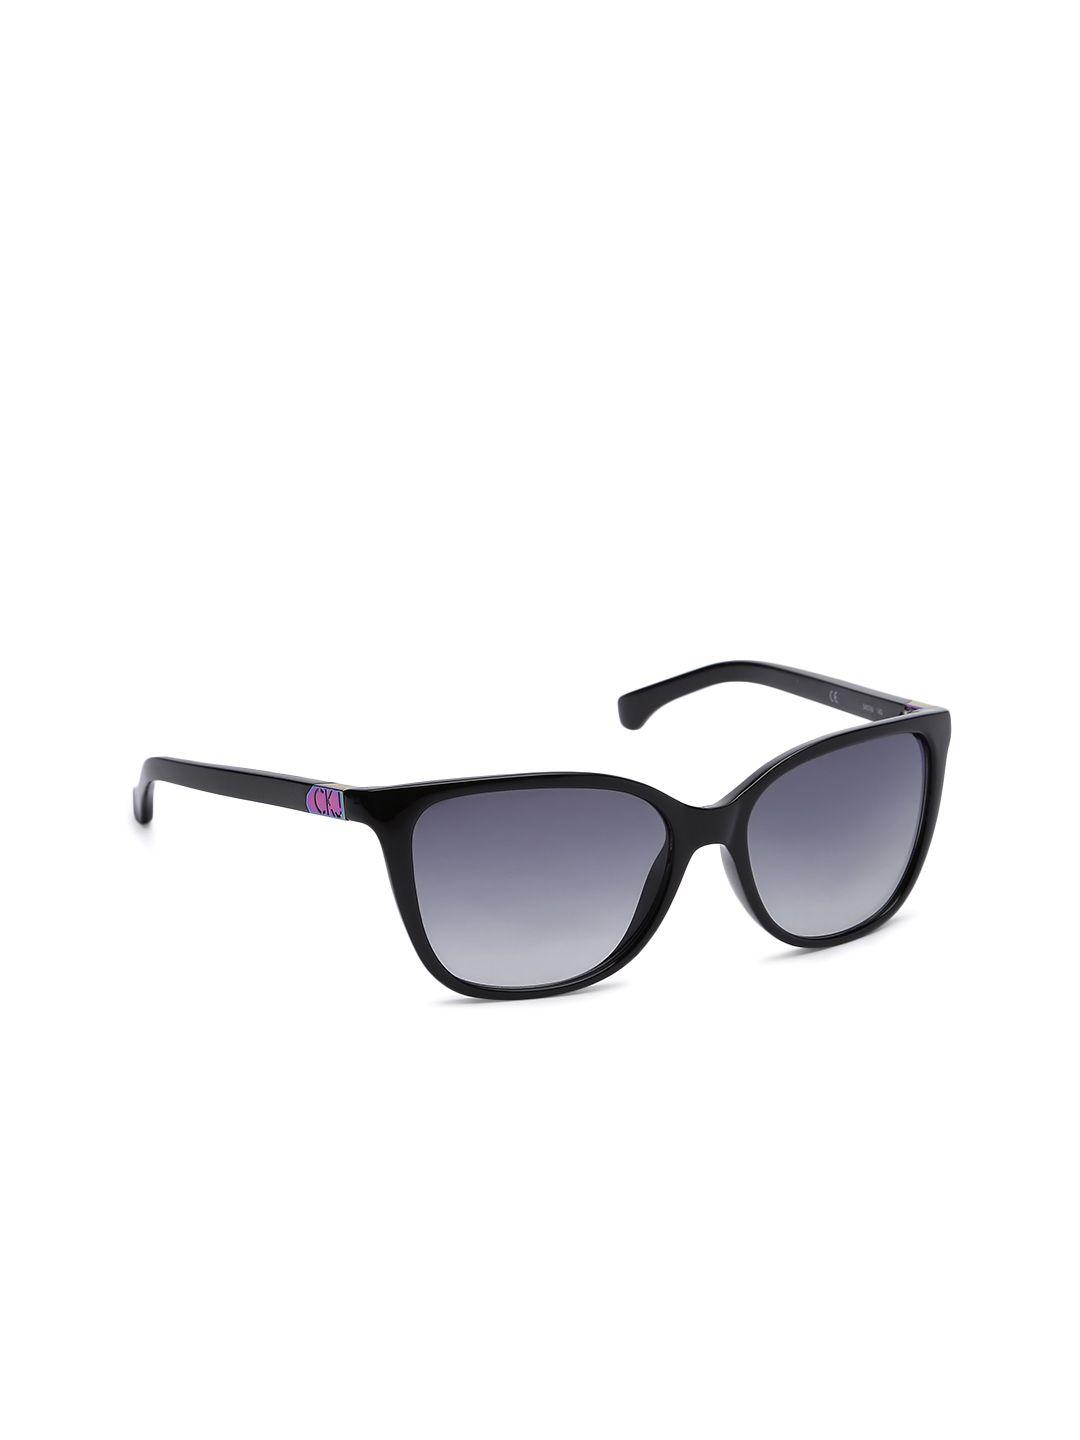 calvin klein jeans women rectangle sunglasses 761 001 54 s